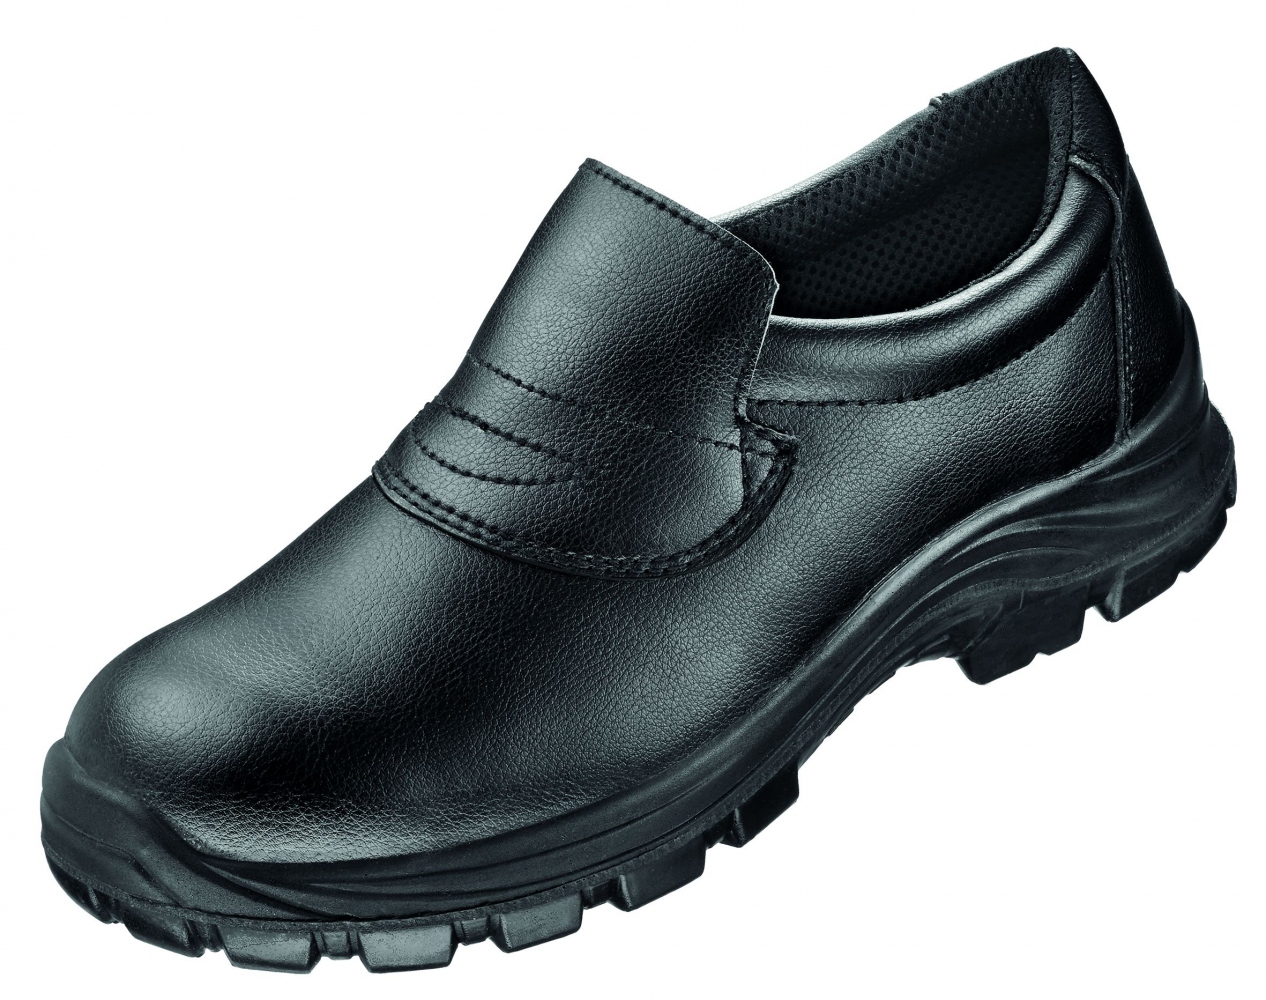 pics/Feldtmann/2019/Schuhe/wica-34647-atella-safety-shoes-s2-black-35-47.jpg